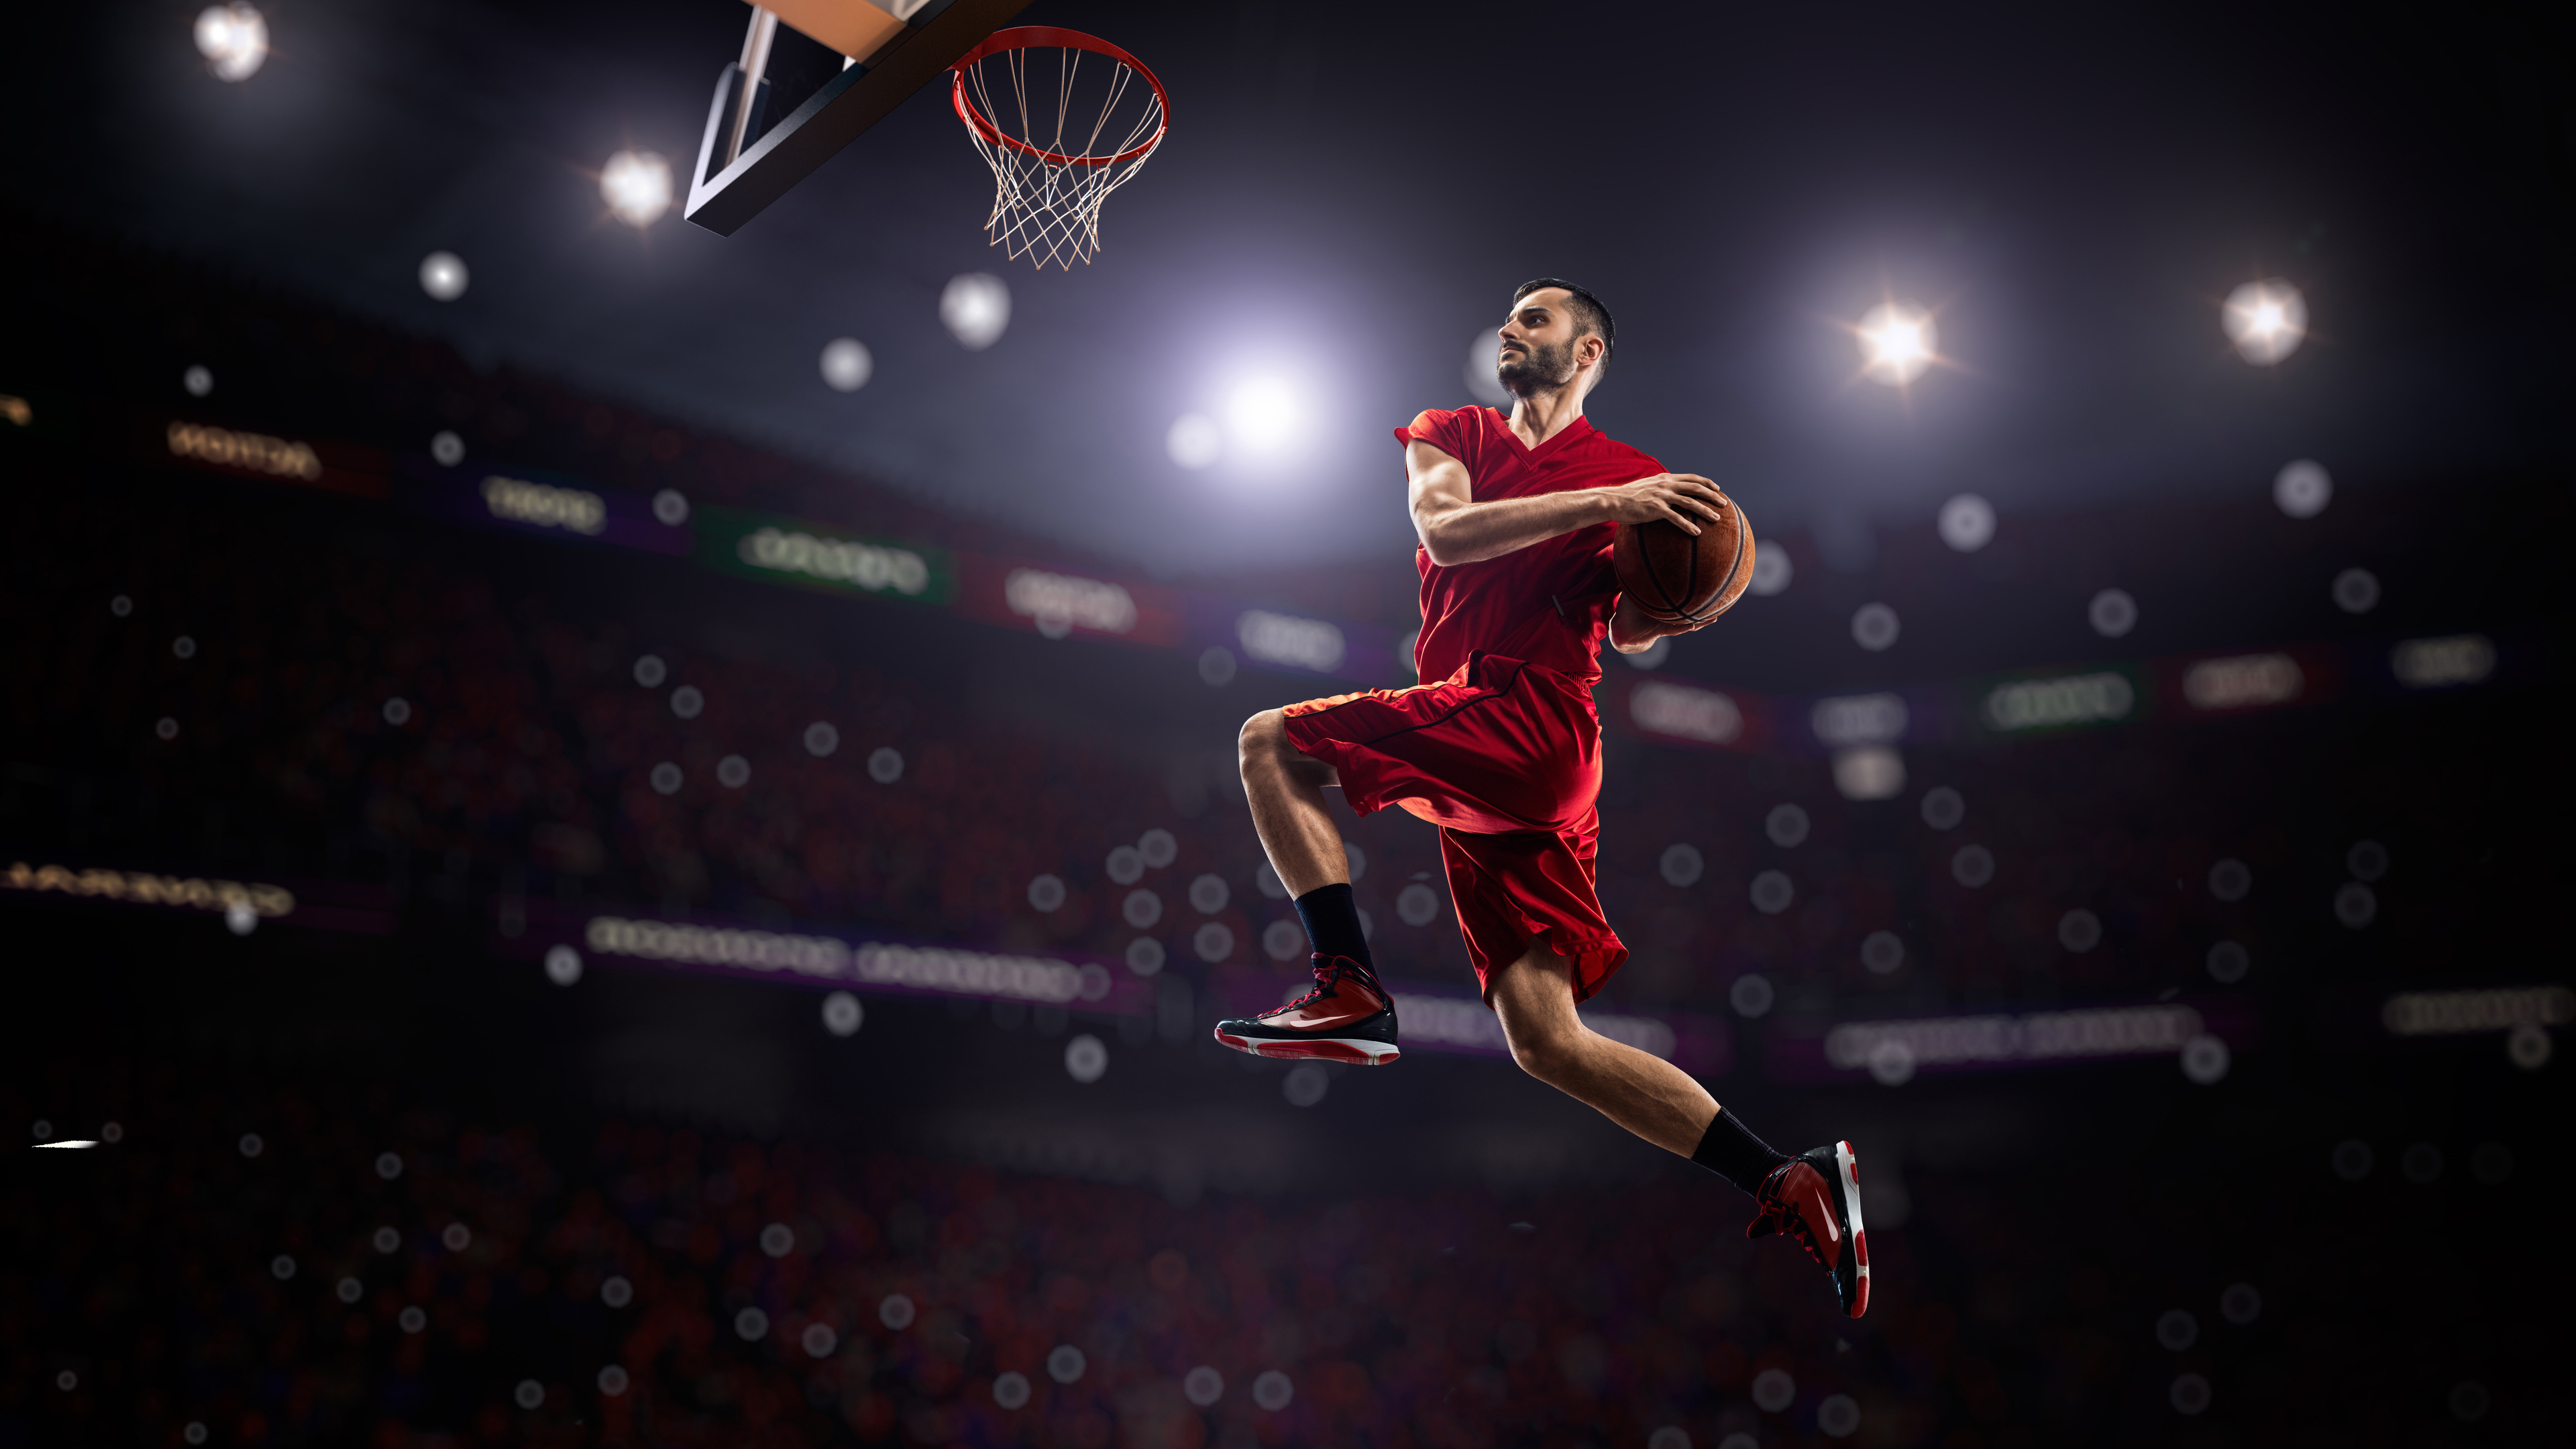 basketball man jumping playing 8k 1538786809 - Basketball Man Jumping Playing 8k - sports wallpapers, hd-wallpapers, basketball wallpapers, 8k wallpapers, 5k wallpapers, 4k-wallpapers